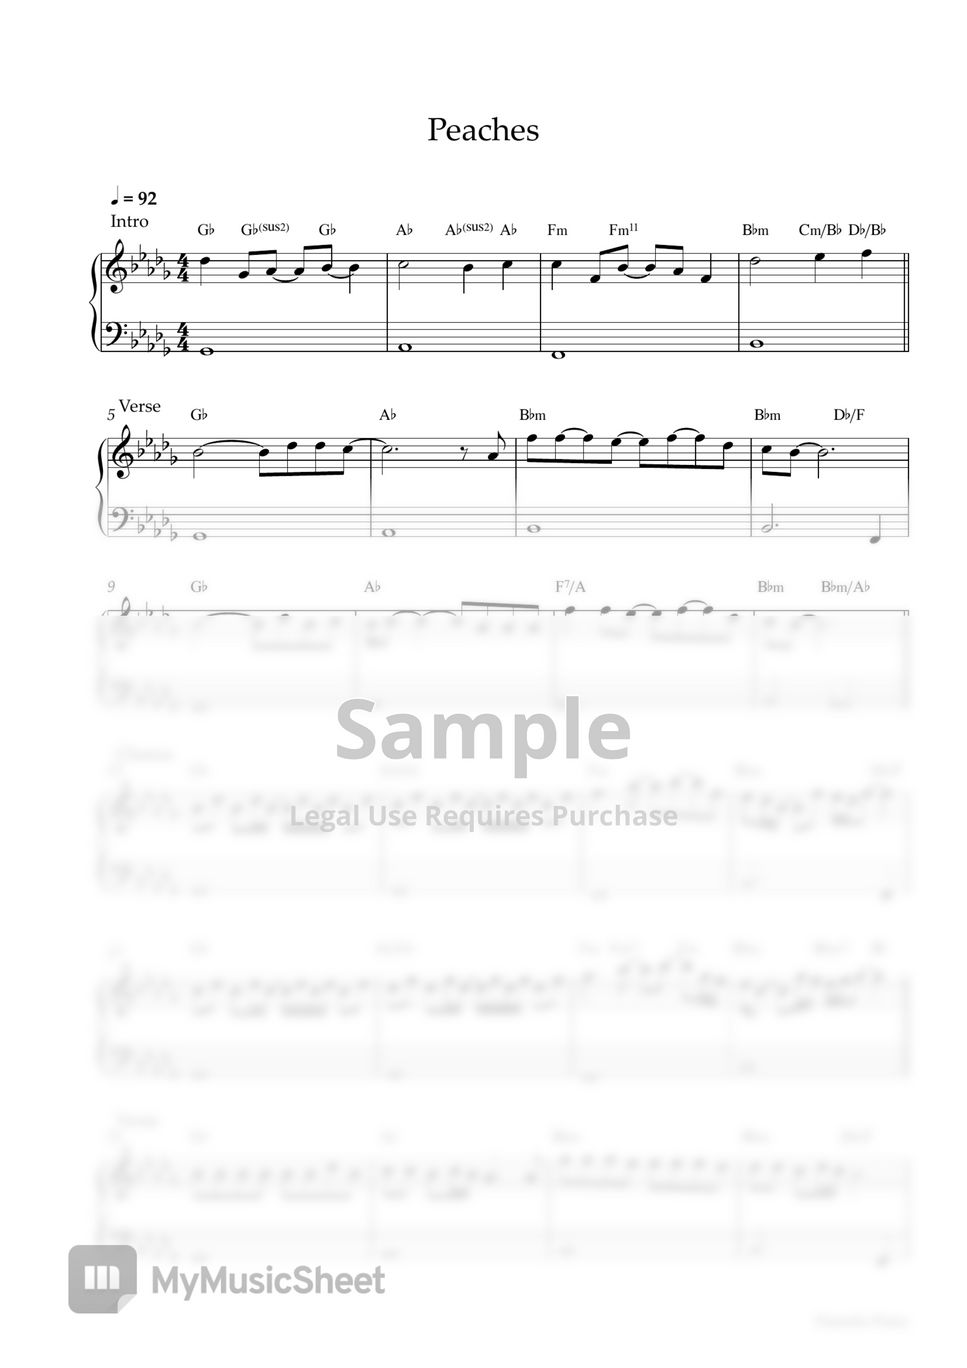 Peaches (arr. BTmusic) Sheet Music | Jack Black | Easy Piano